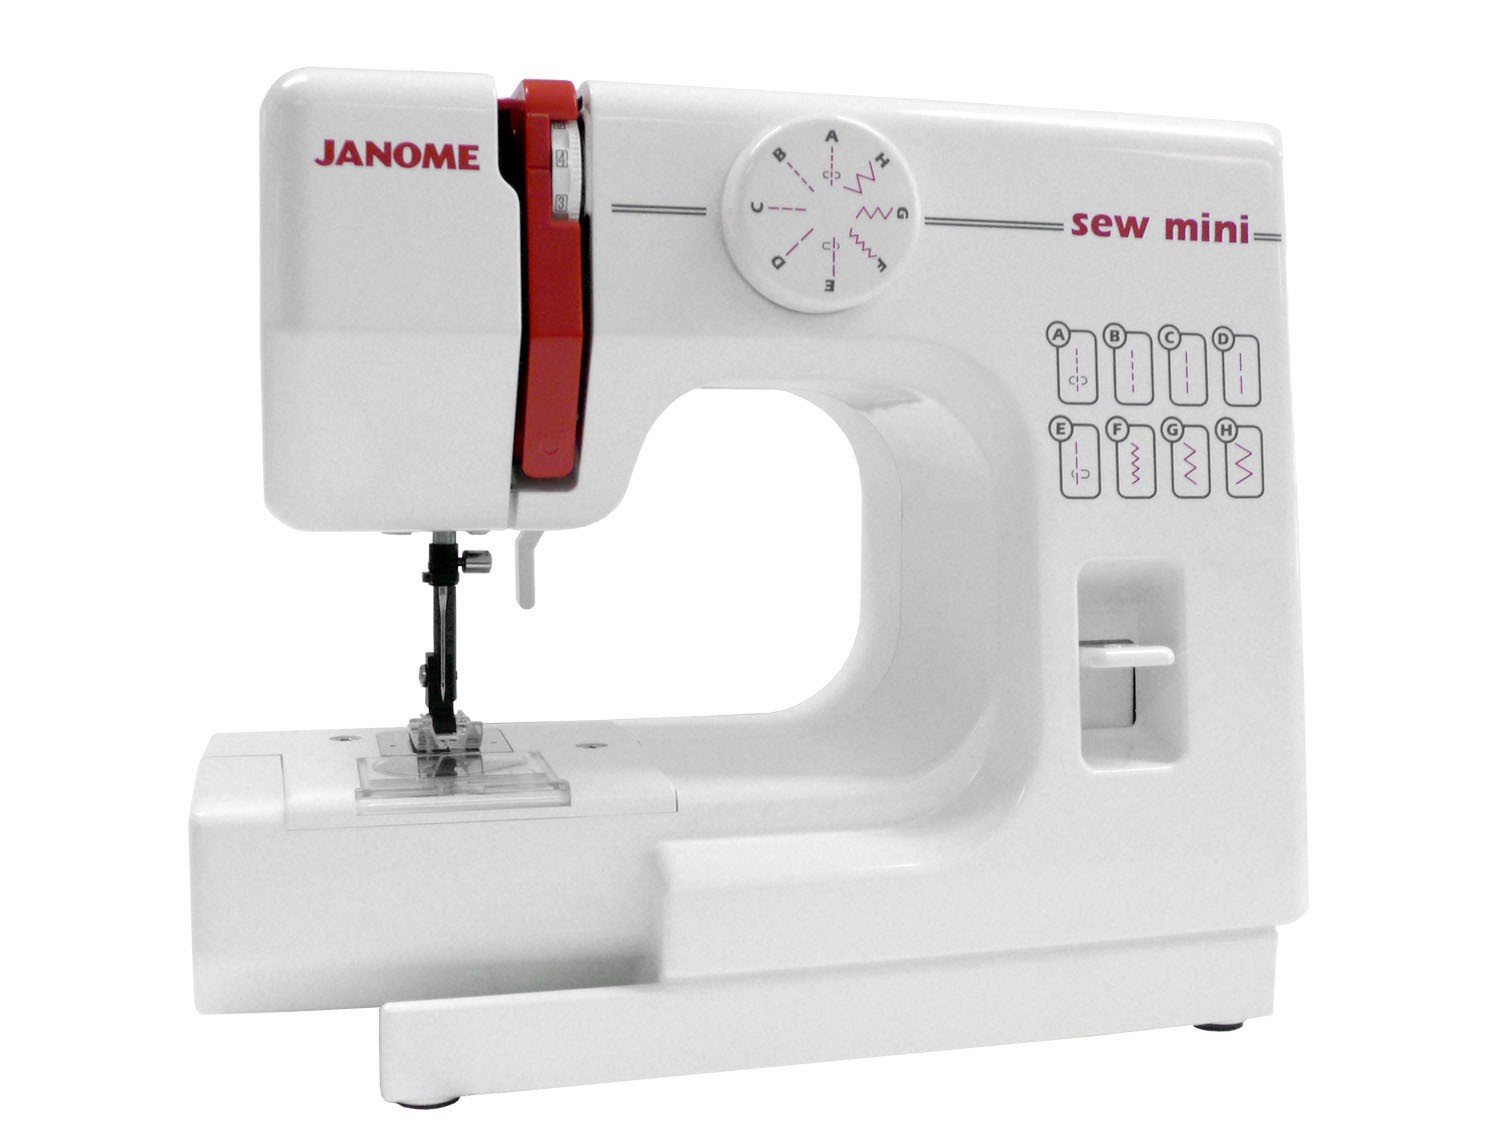 Janome Sew Mini Sewing Machine User Manual